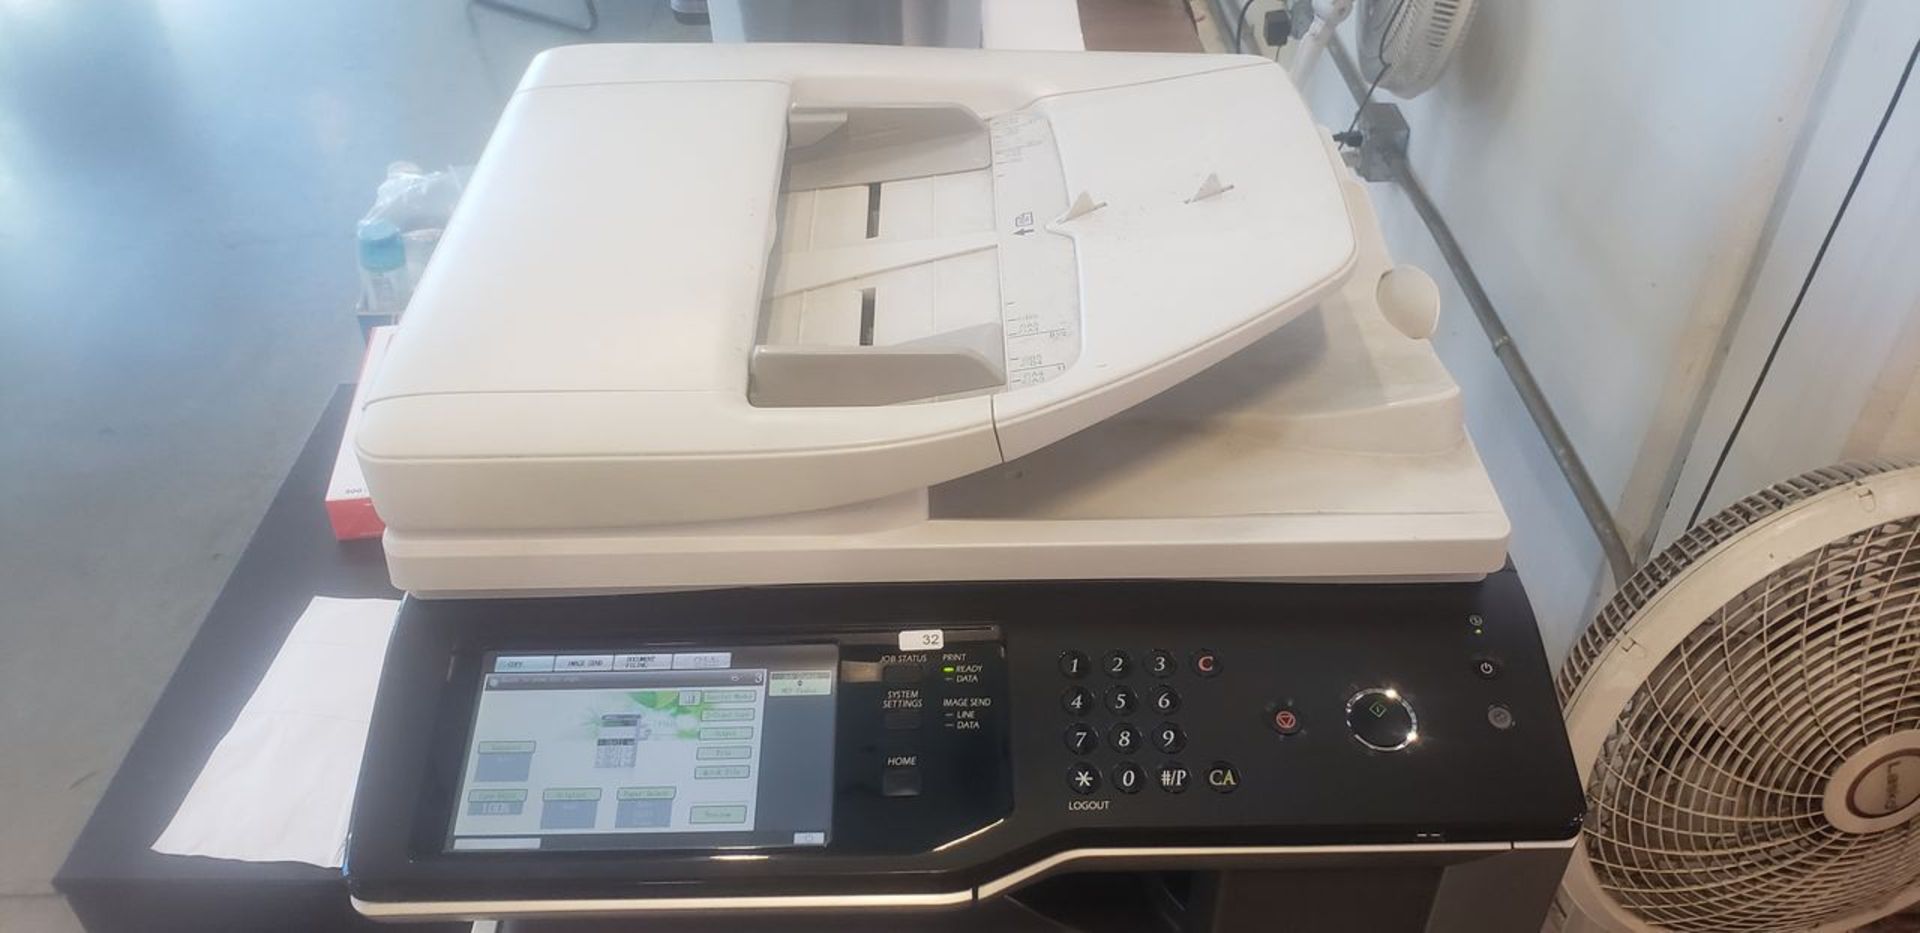 Sharp MX-M453N Printer/Scanner/Copier - (Located In: Redlands, CA) - Image 3 of 4